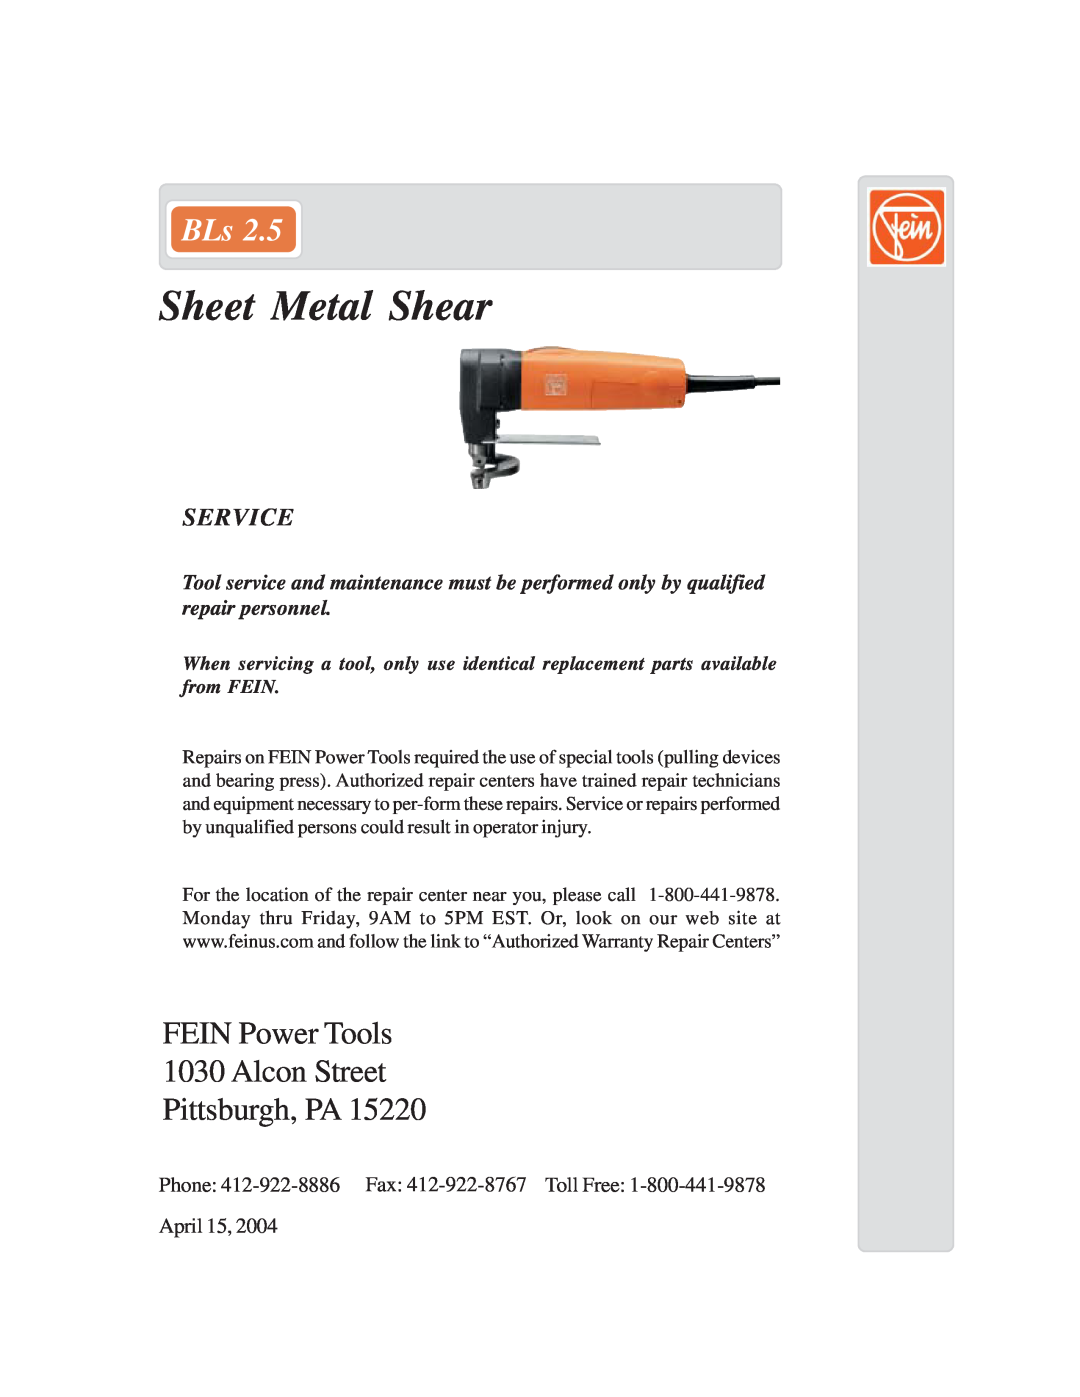 FEIN Power Tools BLs 2.5 warranty Sheet Metal Shear, FEIN Power Tools 1030 Alcon Street Pittsburgh, PA, Service, April 